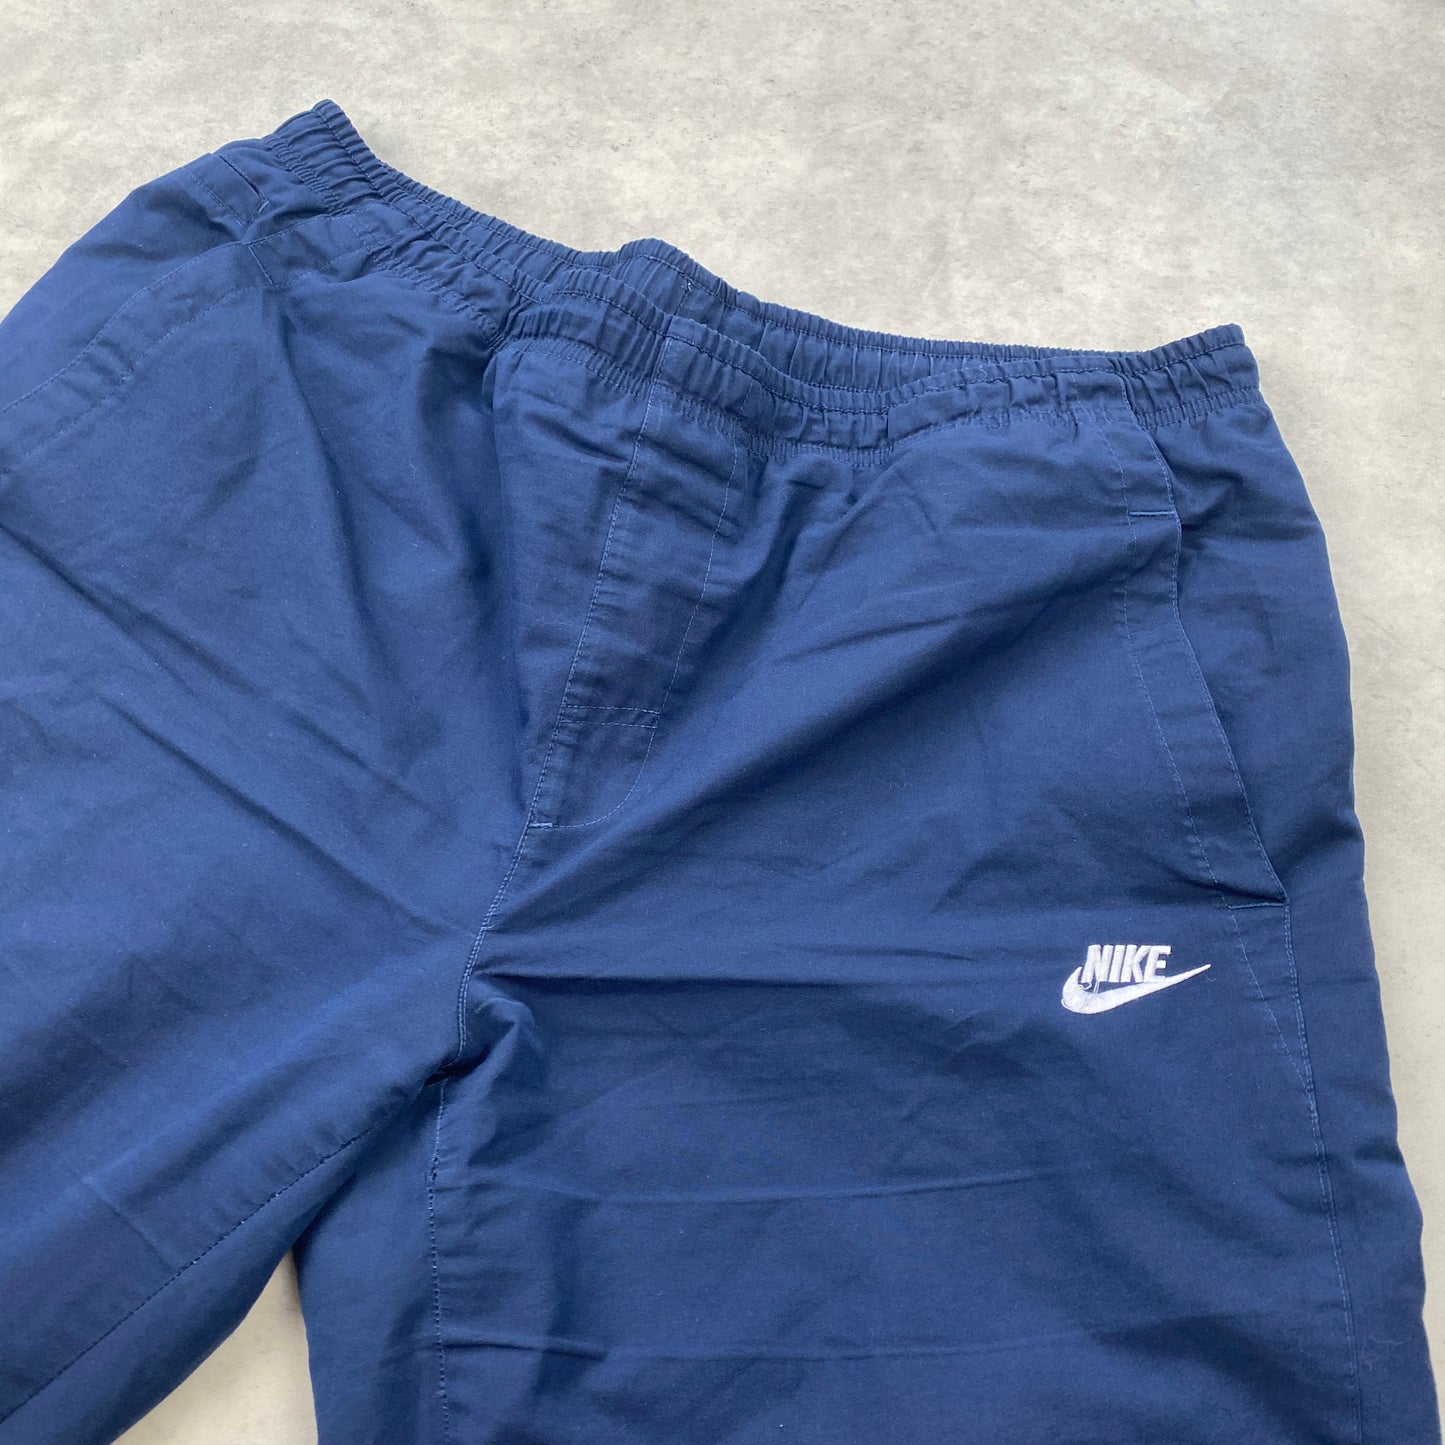 Nike track pants (XL)